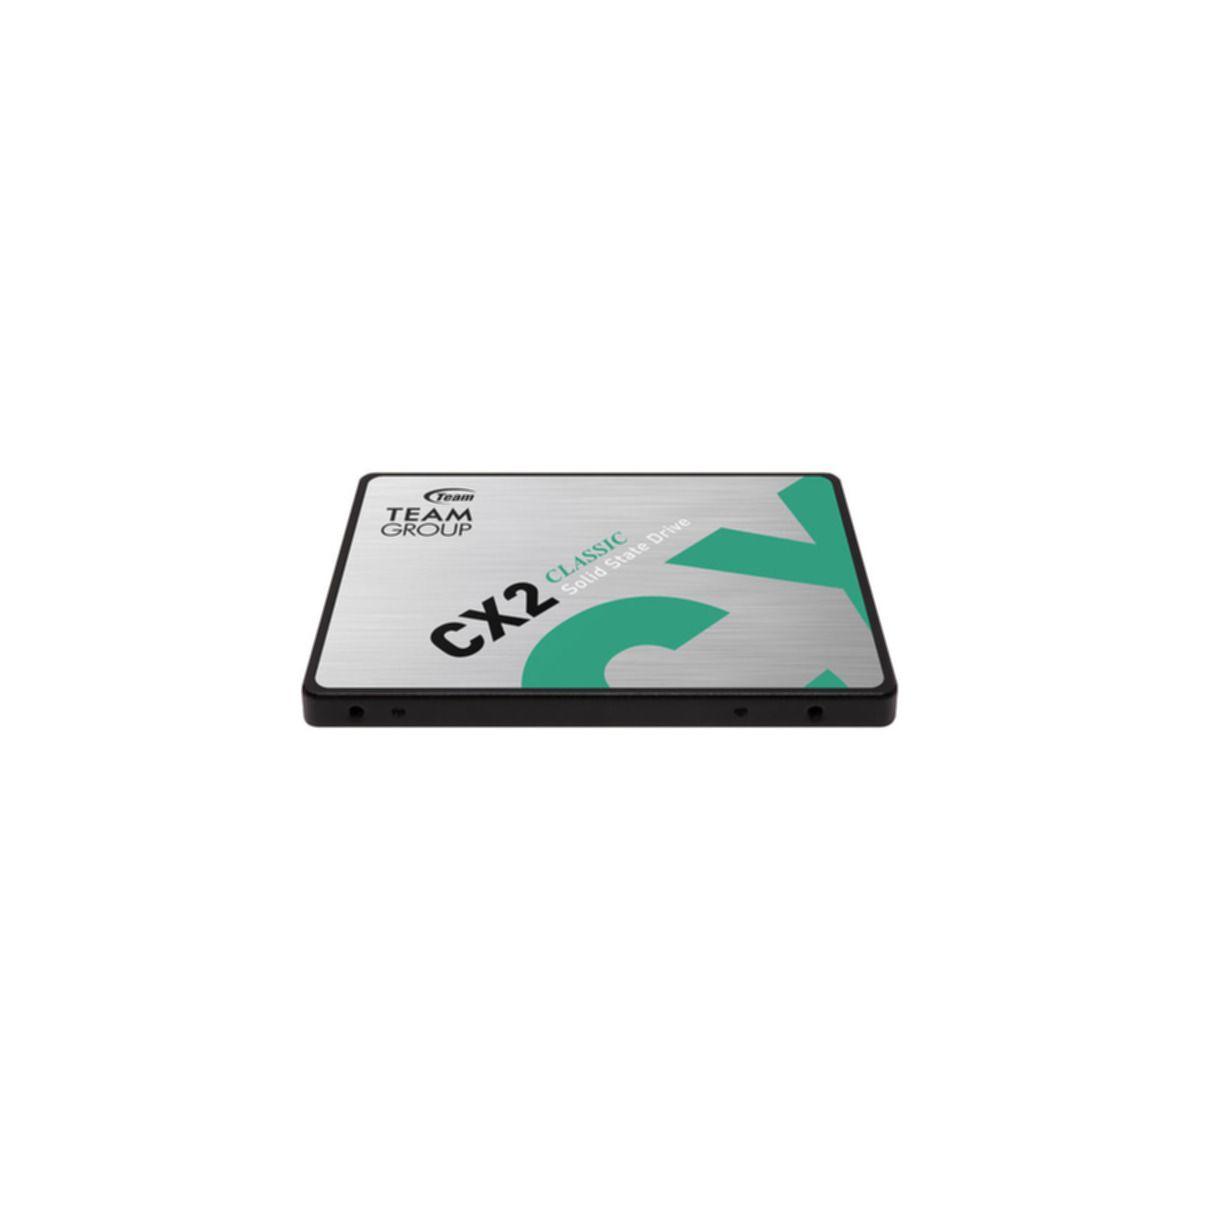 TEAM GROUP CX2, 512 intern GB, SSD